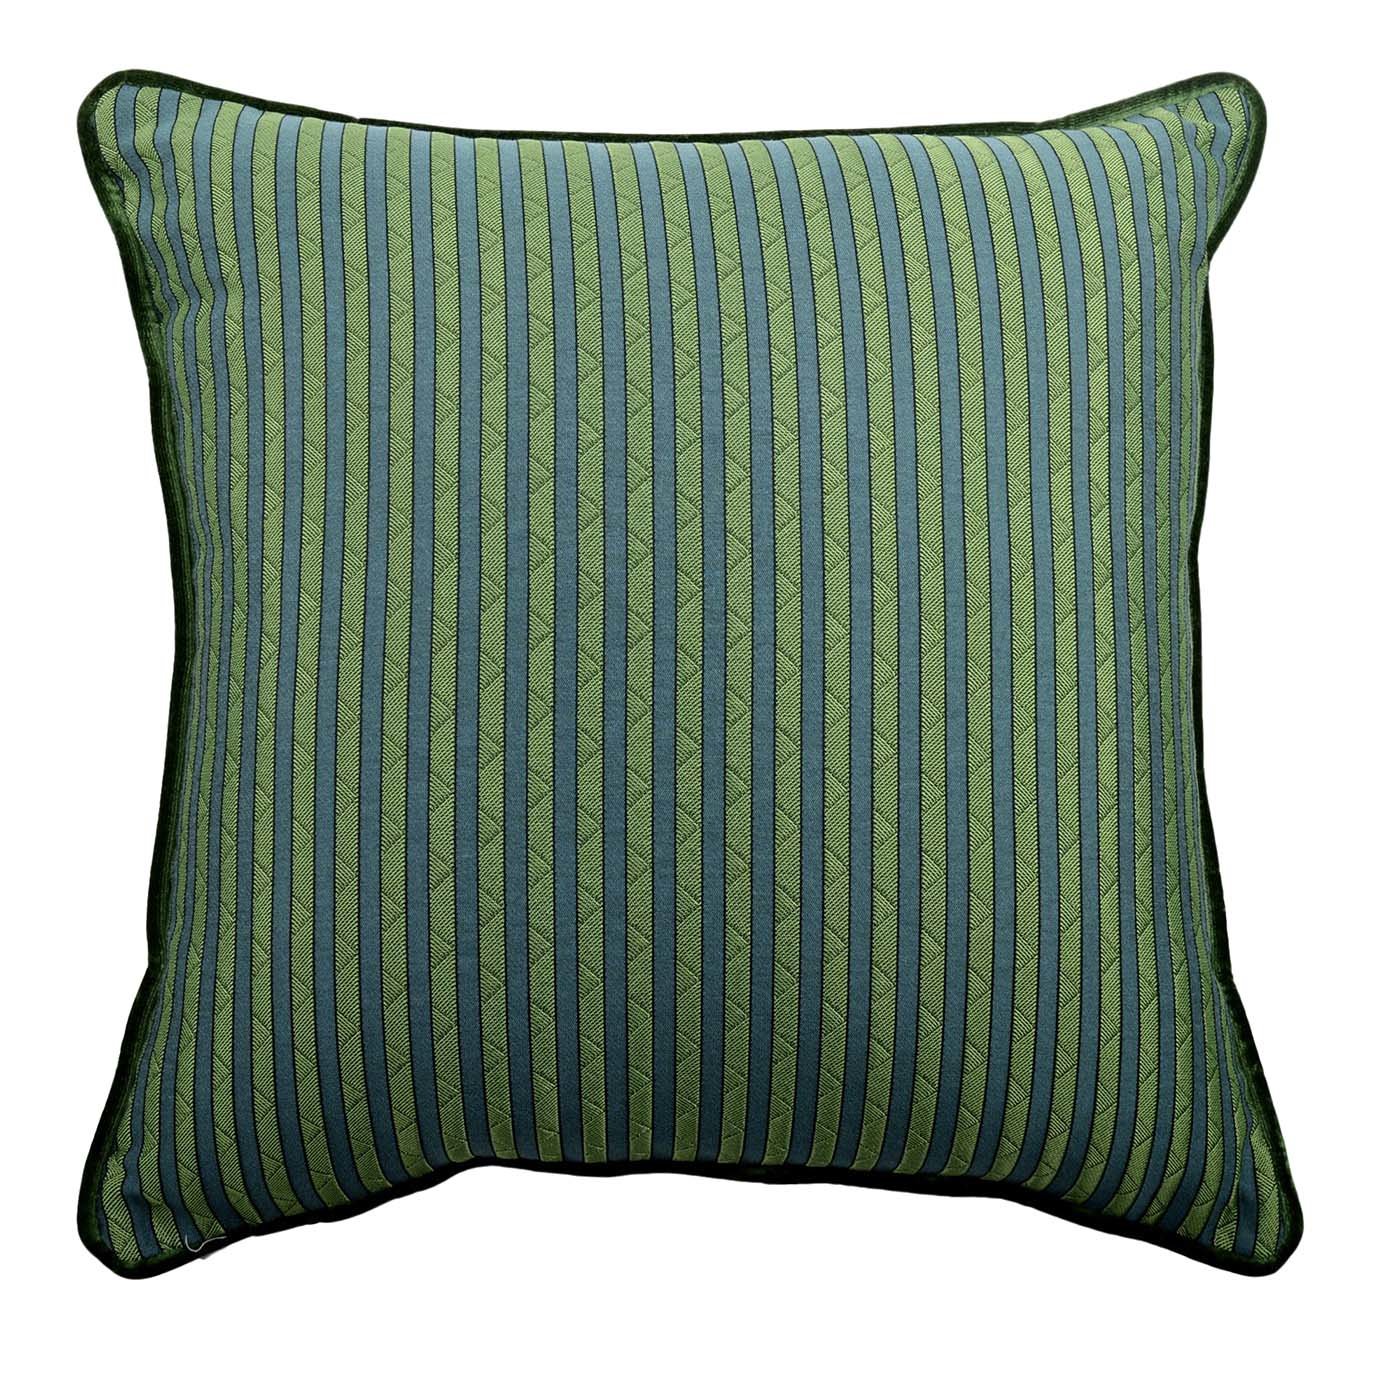 Emerald Carré Cushion in striped jacquard fabric - Main view